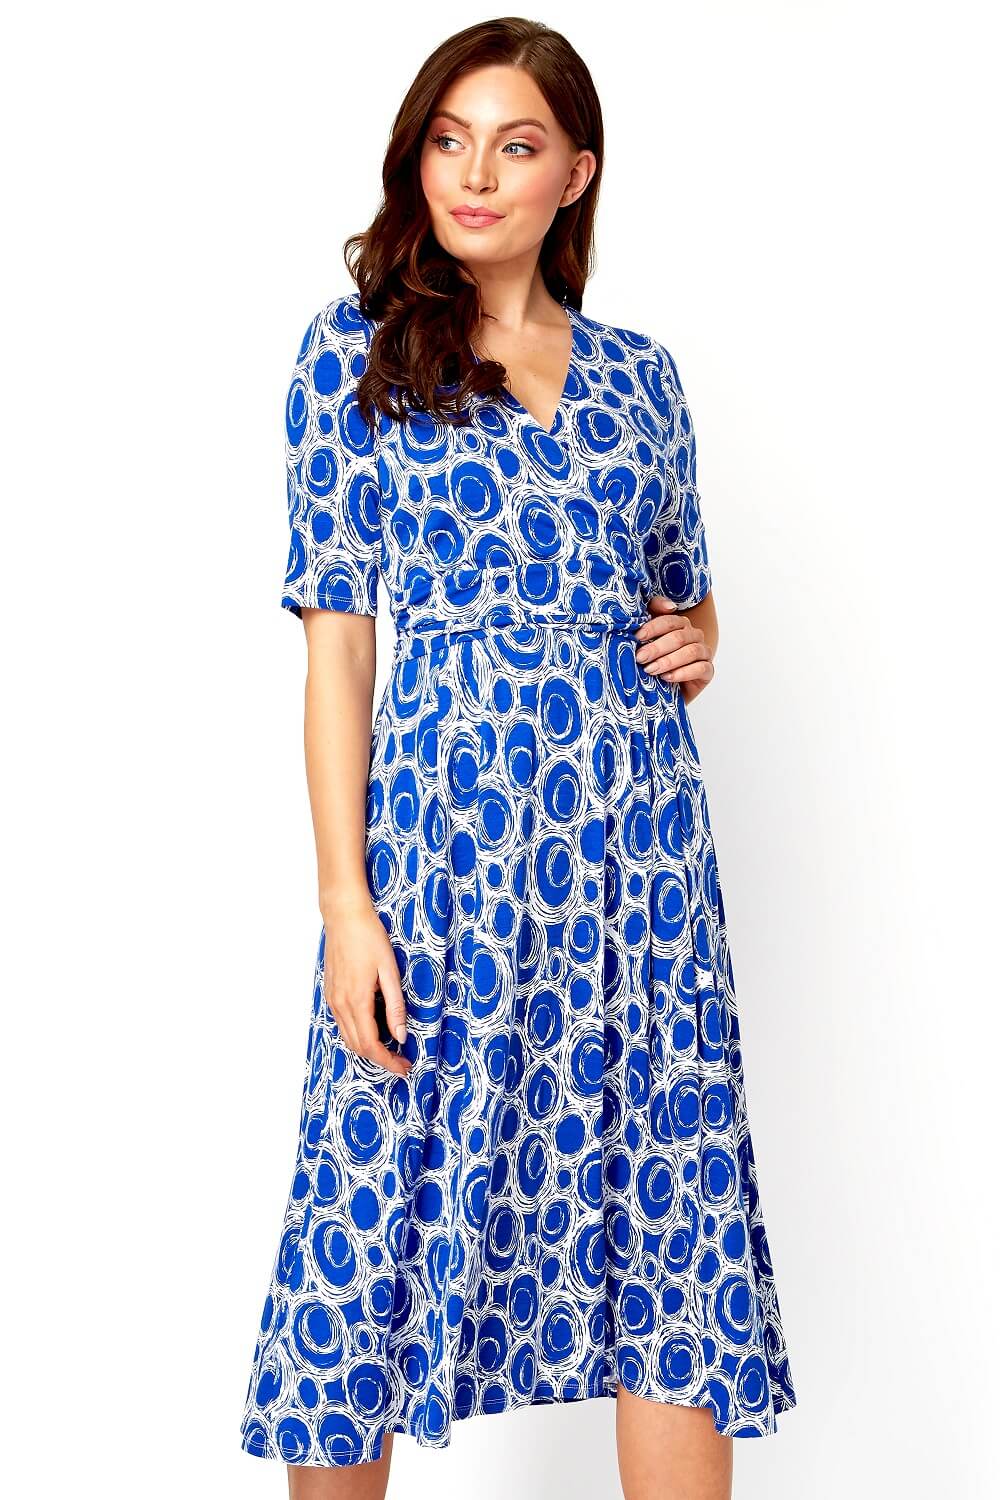 Spot Printed Fit and Flare Dress in Royal Blue - Roman Originals UK